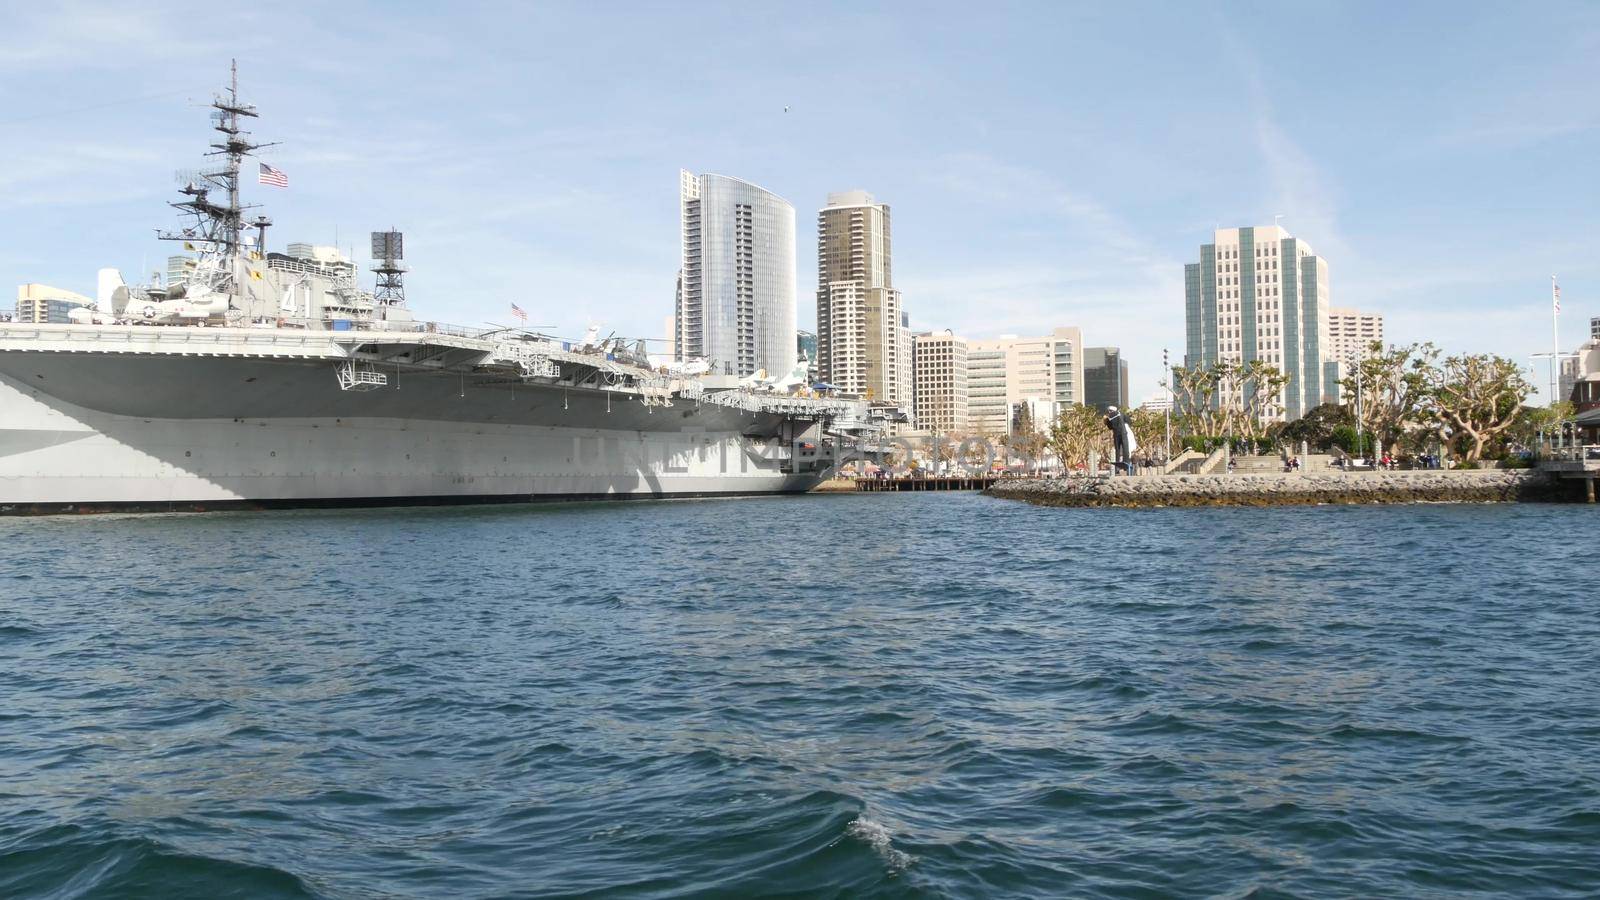 SAN DIEGO, CALIFORNIA USA - 30 JAN 2020: USS Midway military aircraft carrier, historic war ship. Naval army battleship. Maritime warship, legend of navy fleet near Unconditional Surrender Statue by DogoraSun